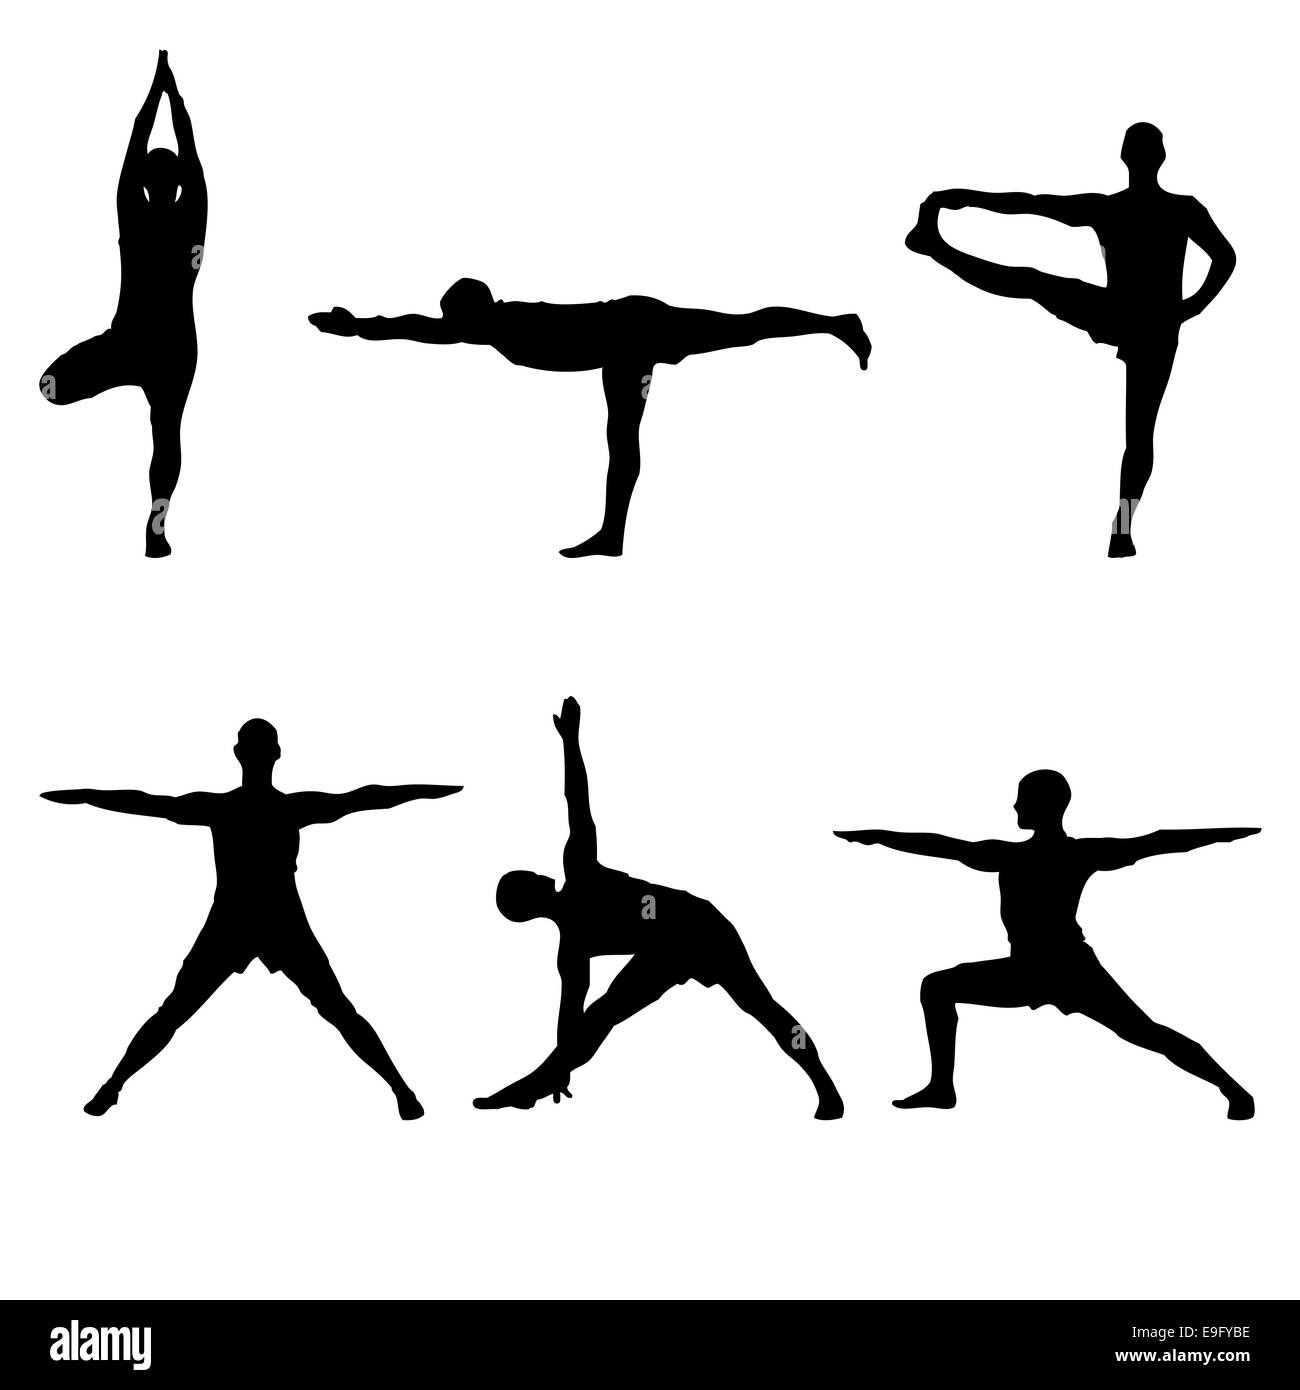 six yoga standing poses Stock Photo - Alamy